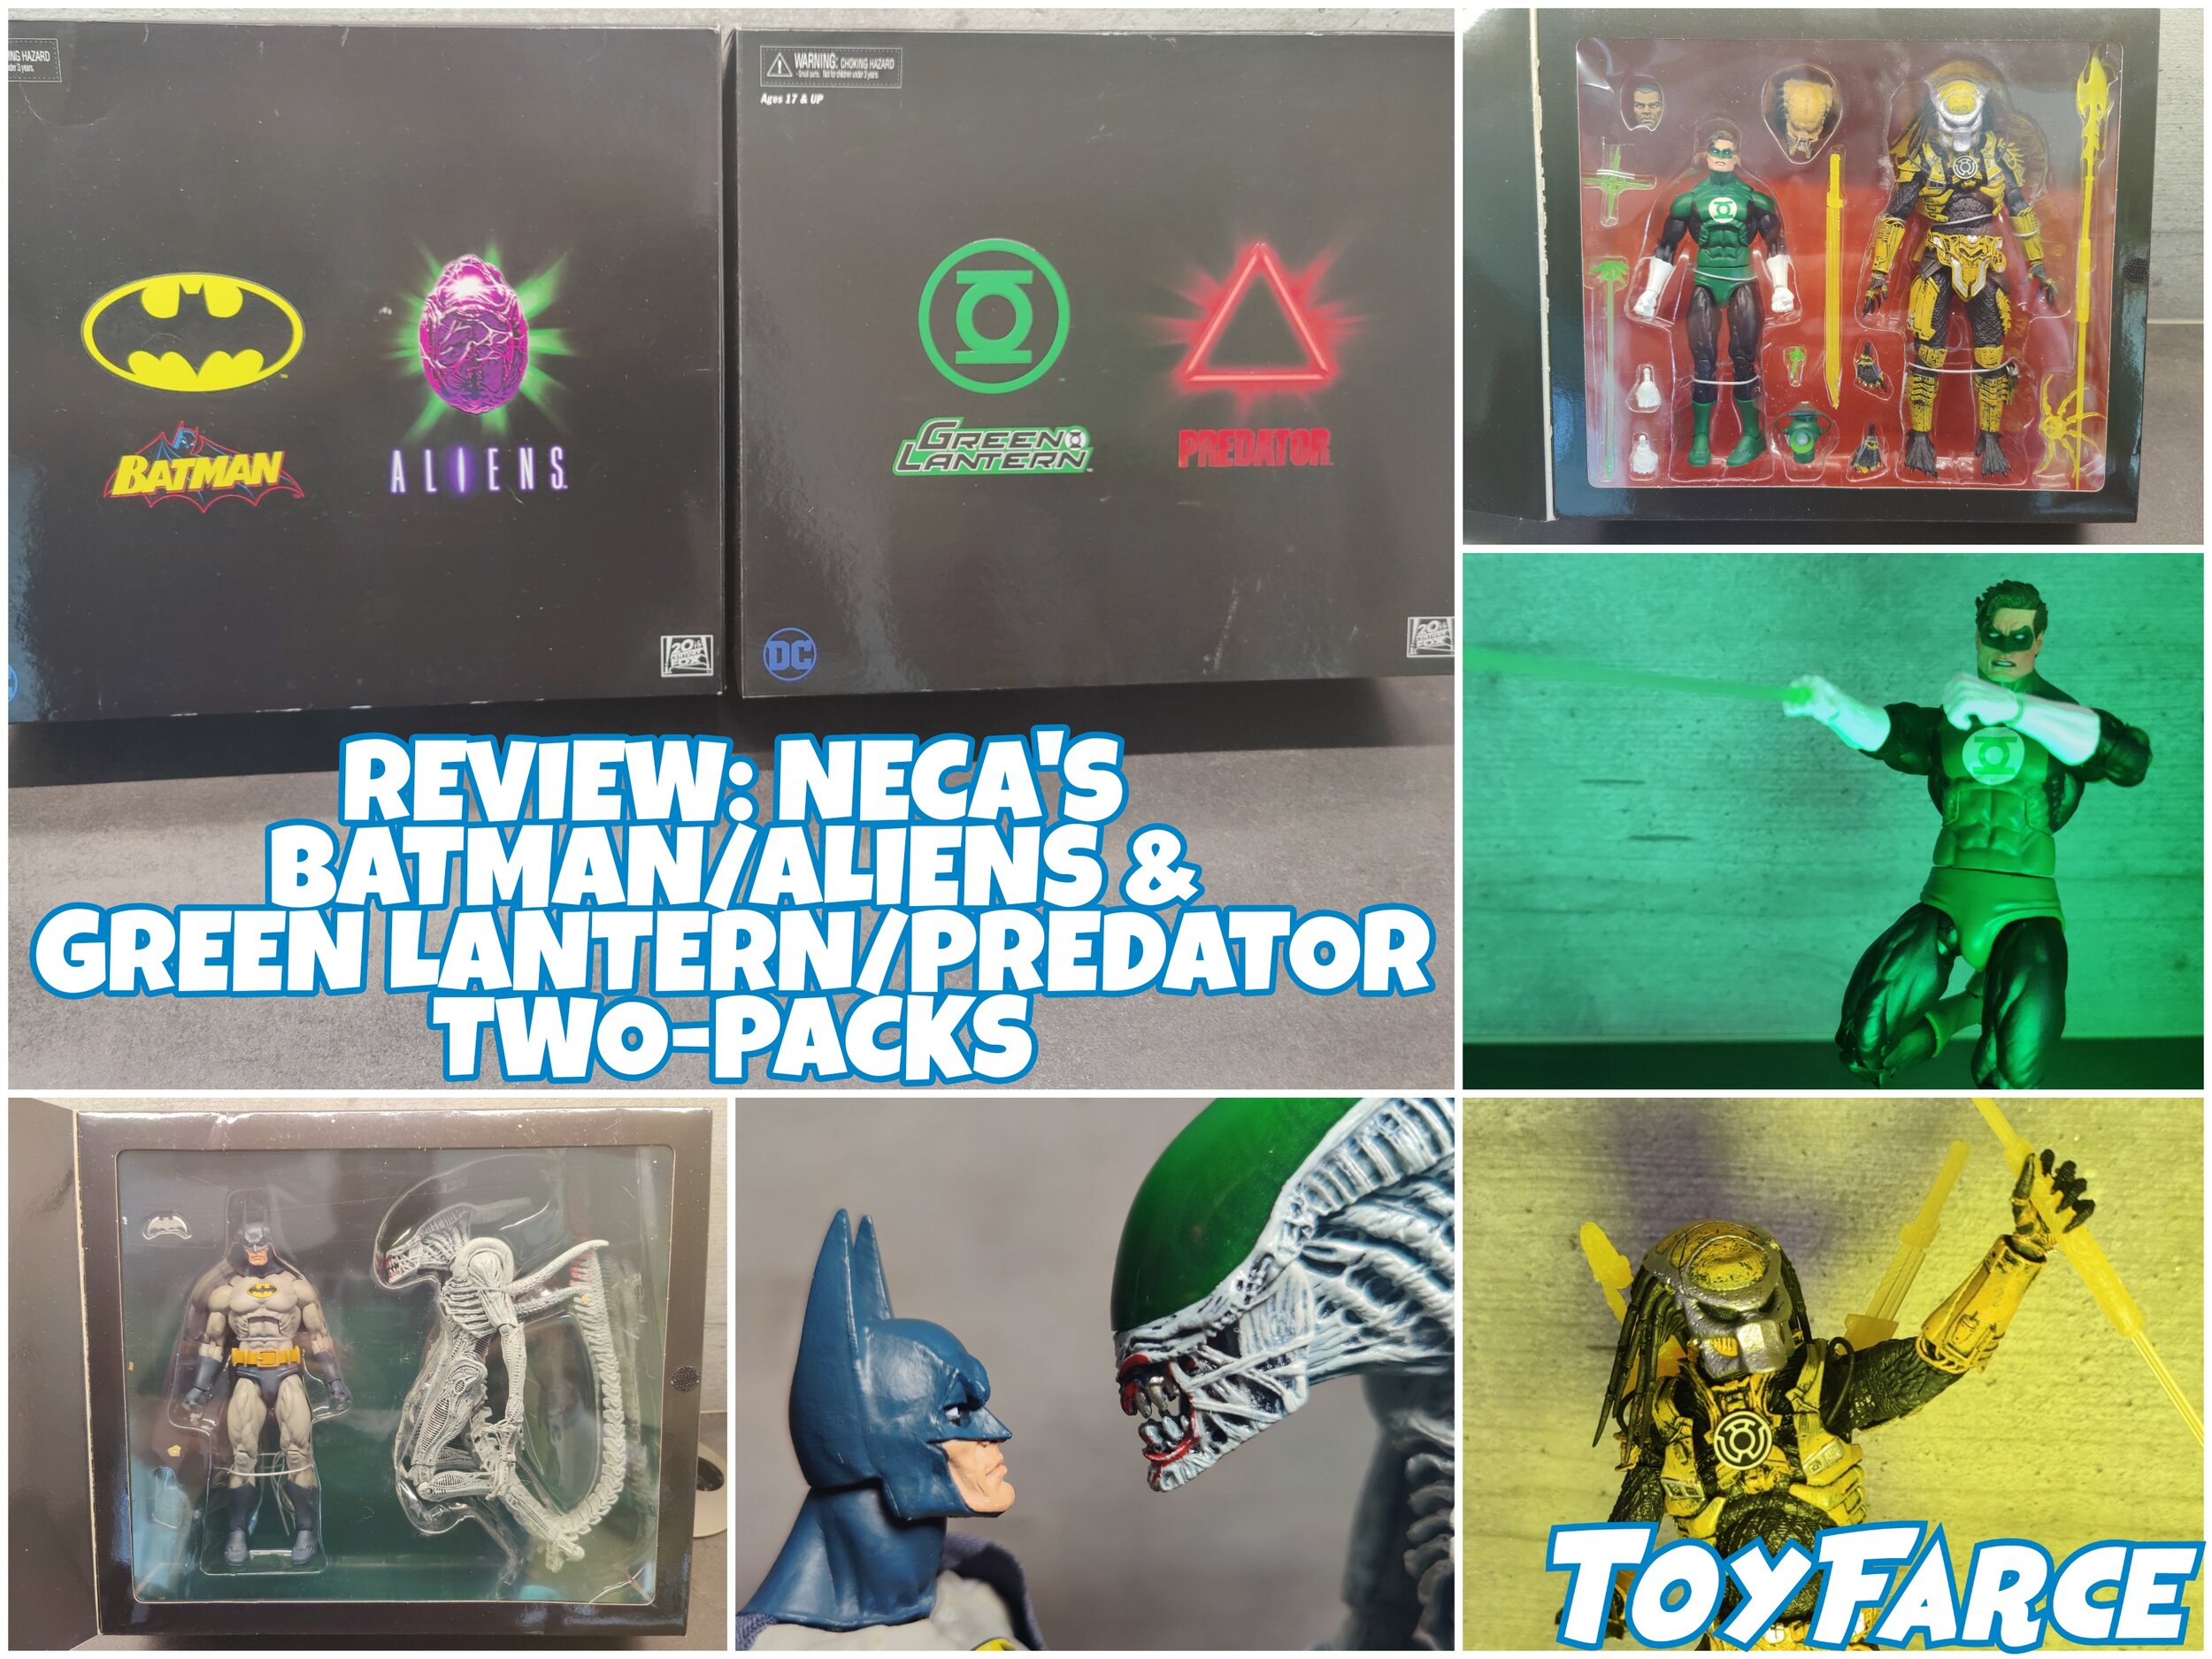 ToyFarce — REVIEW: NECA'S BATMAN/ALIENS & GREEN LANTERN/PREDATOR TWO-PACKS